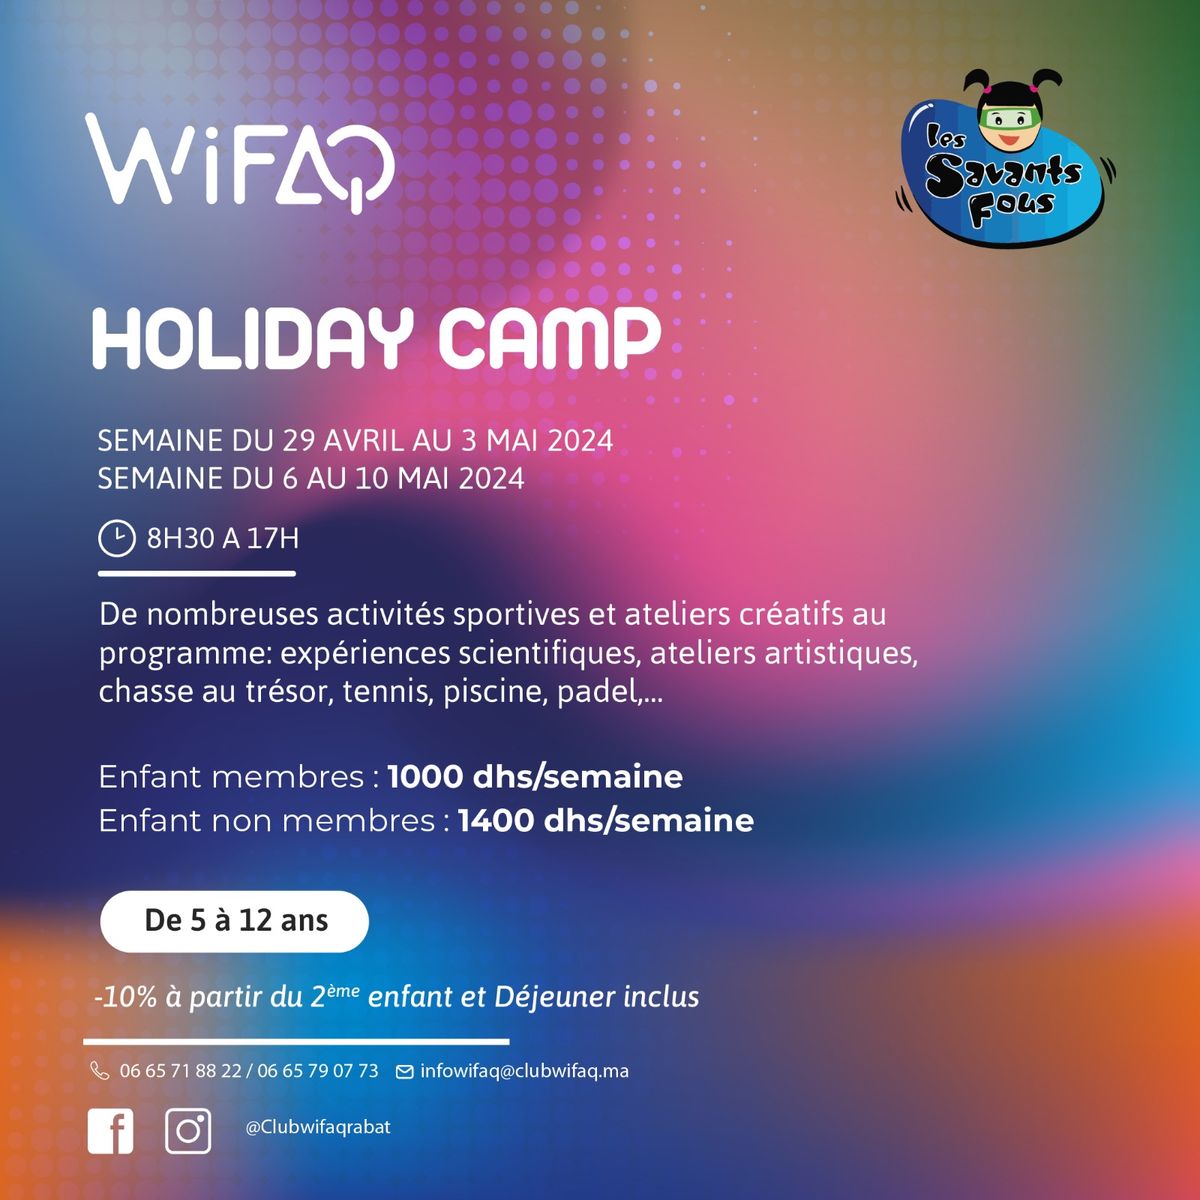 Wifaq Holiday Camp